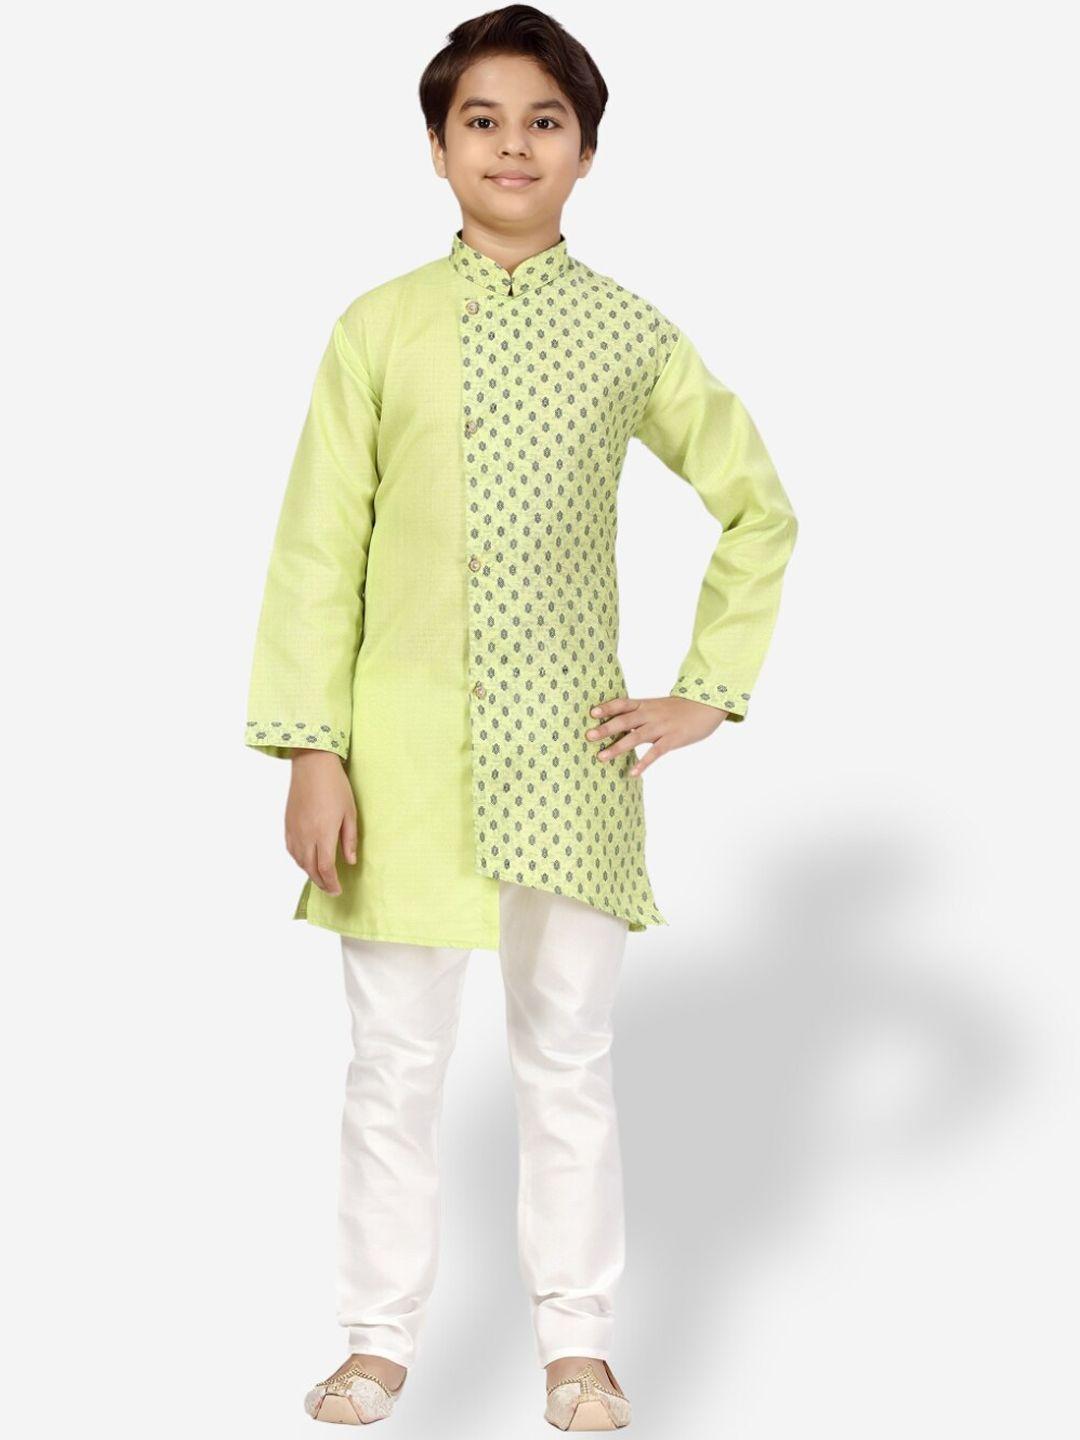 aarika boys ethnic motifs printed pure cotton mandarin collar kurta with pyjamas